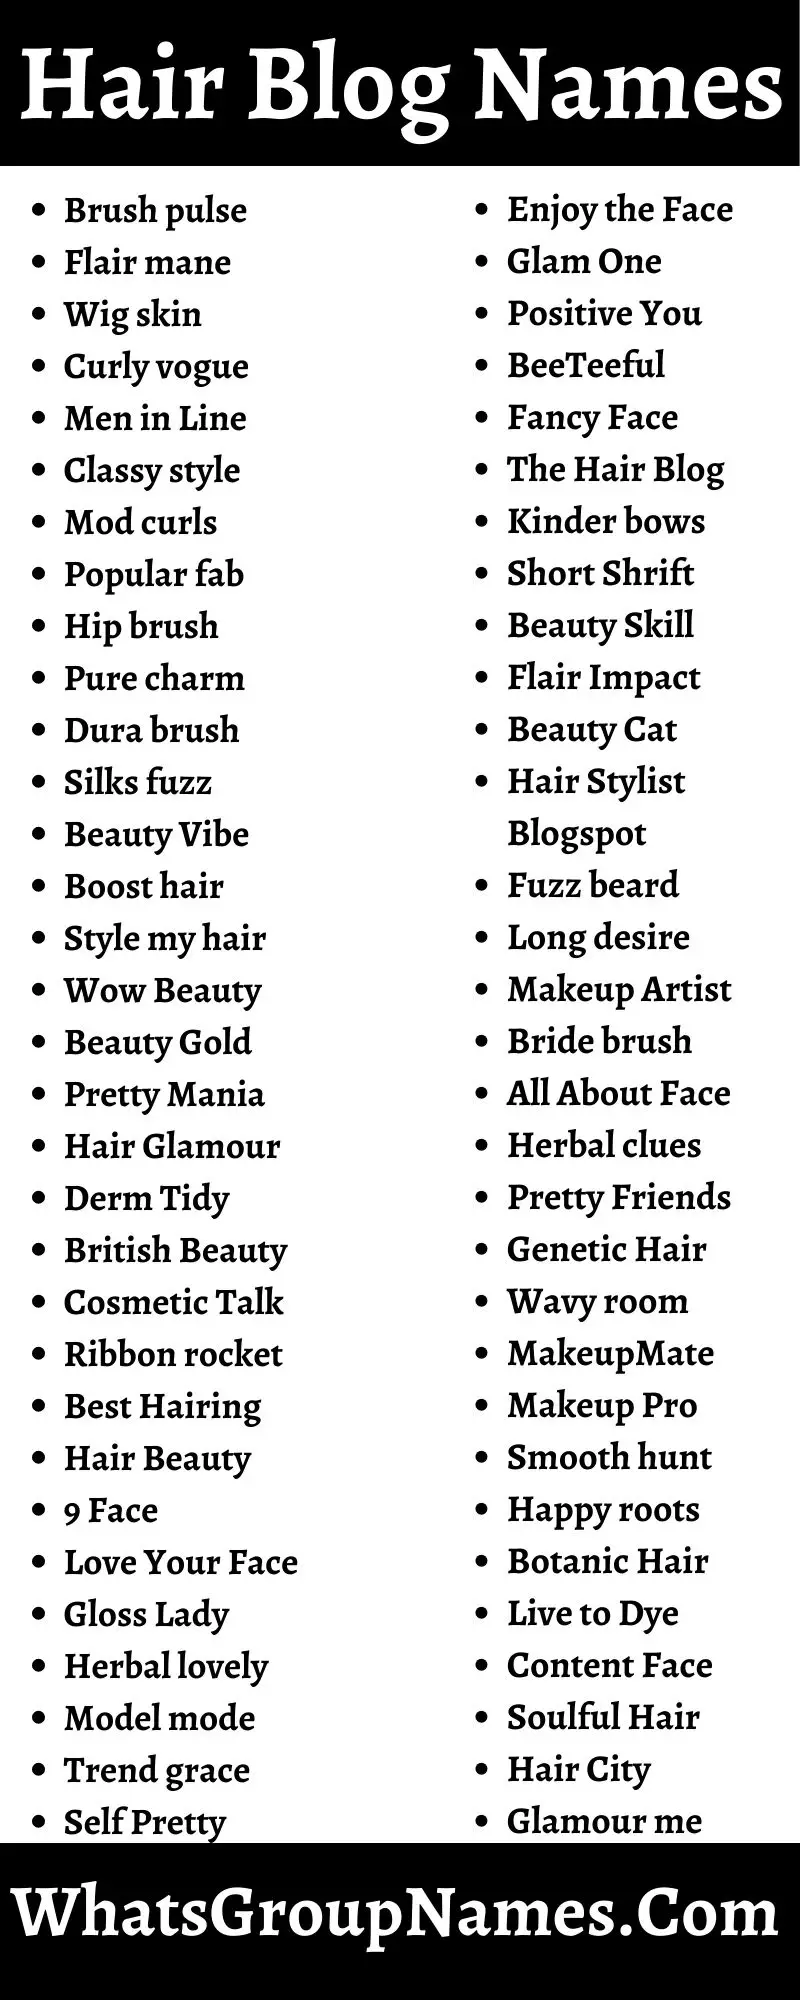 Hair Blog Names